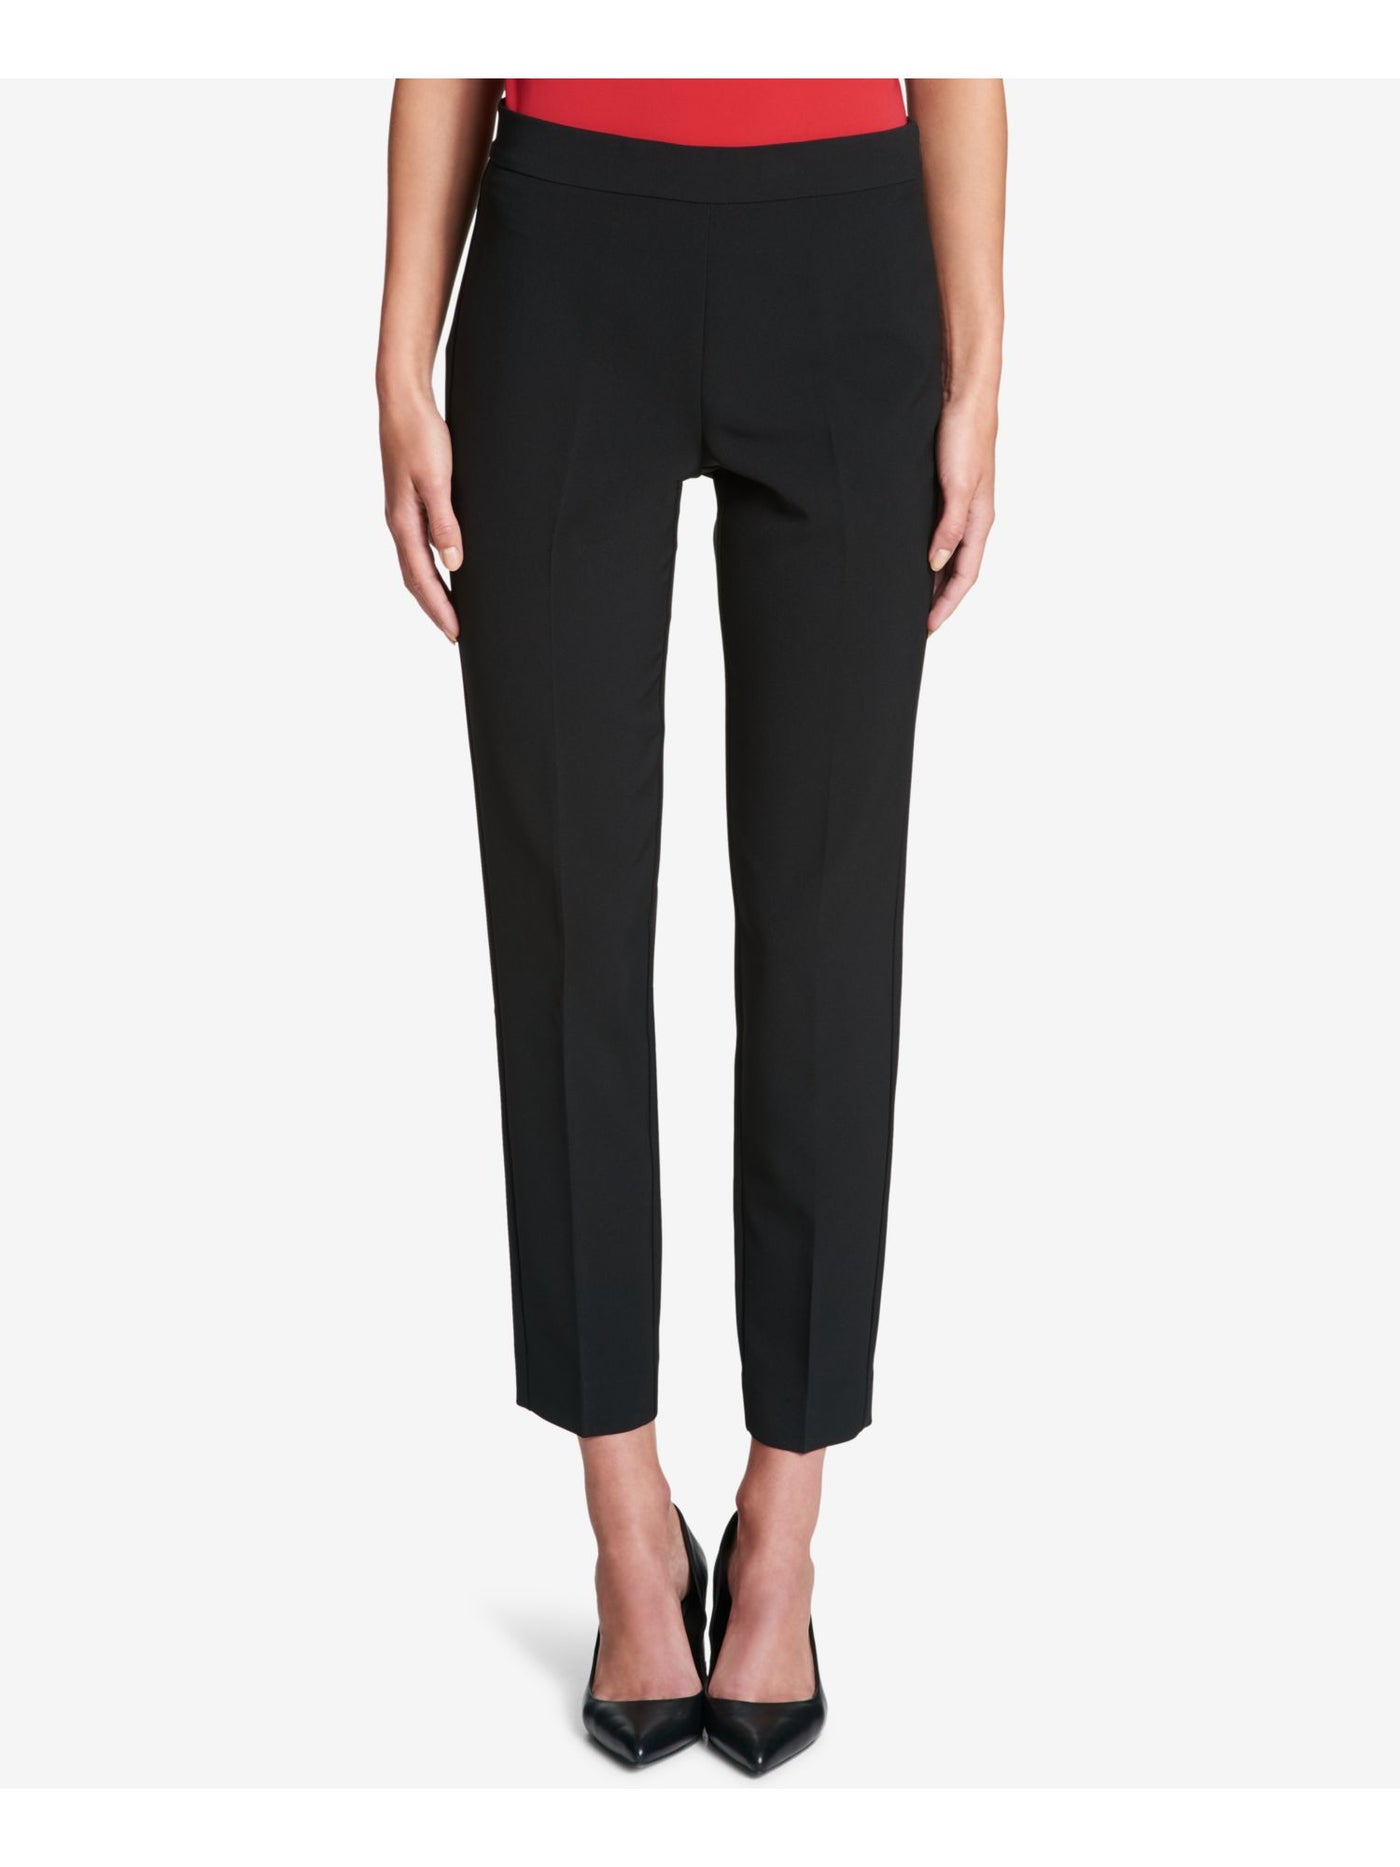 DKNY Womens Black Wear To Work Straight leg Pants 12